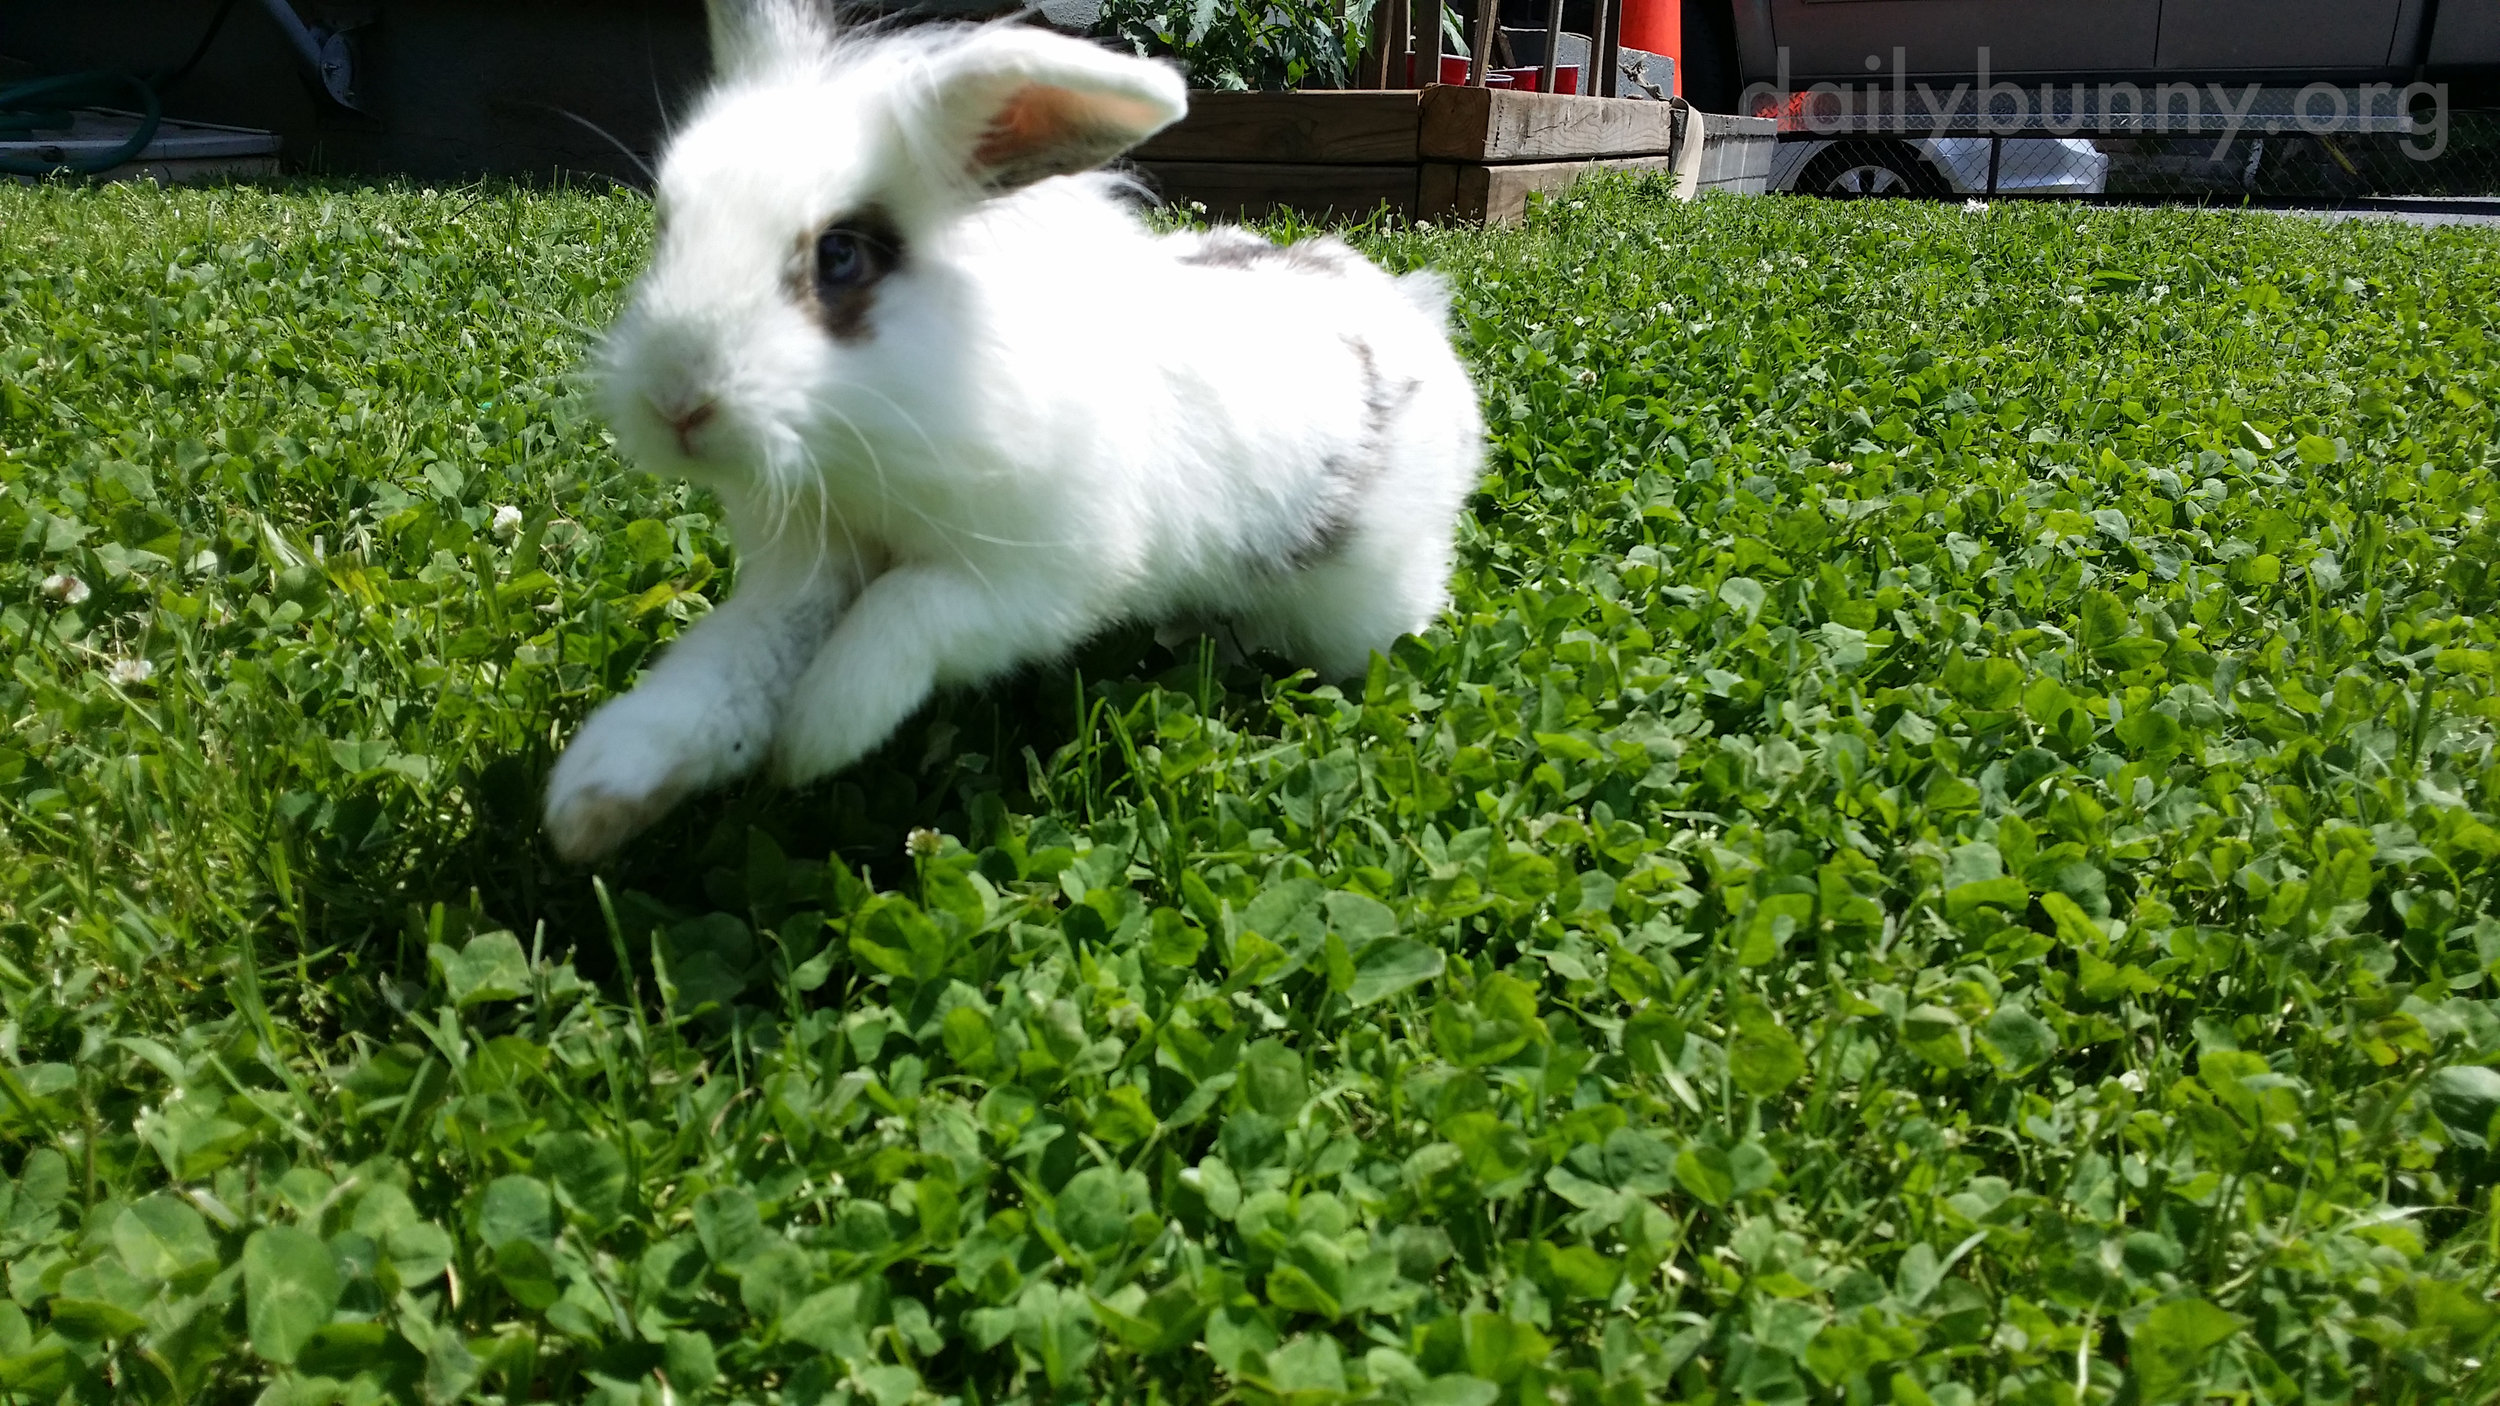 Bunny Romps Through the Grass